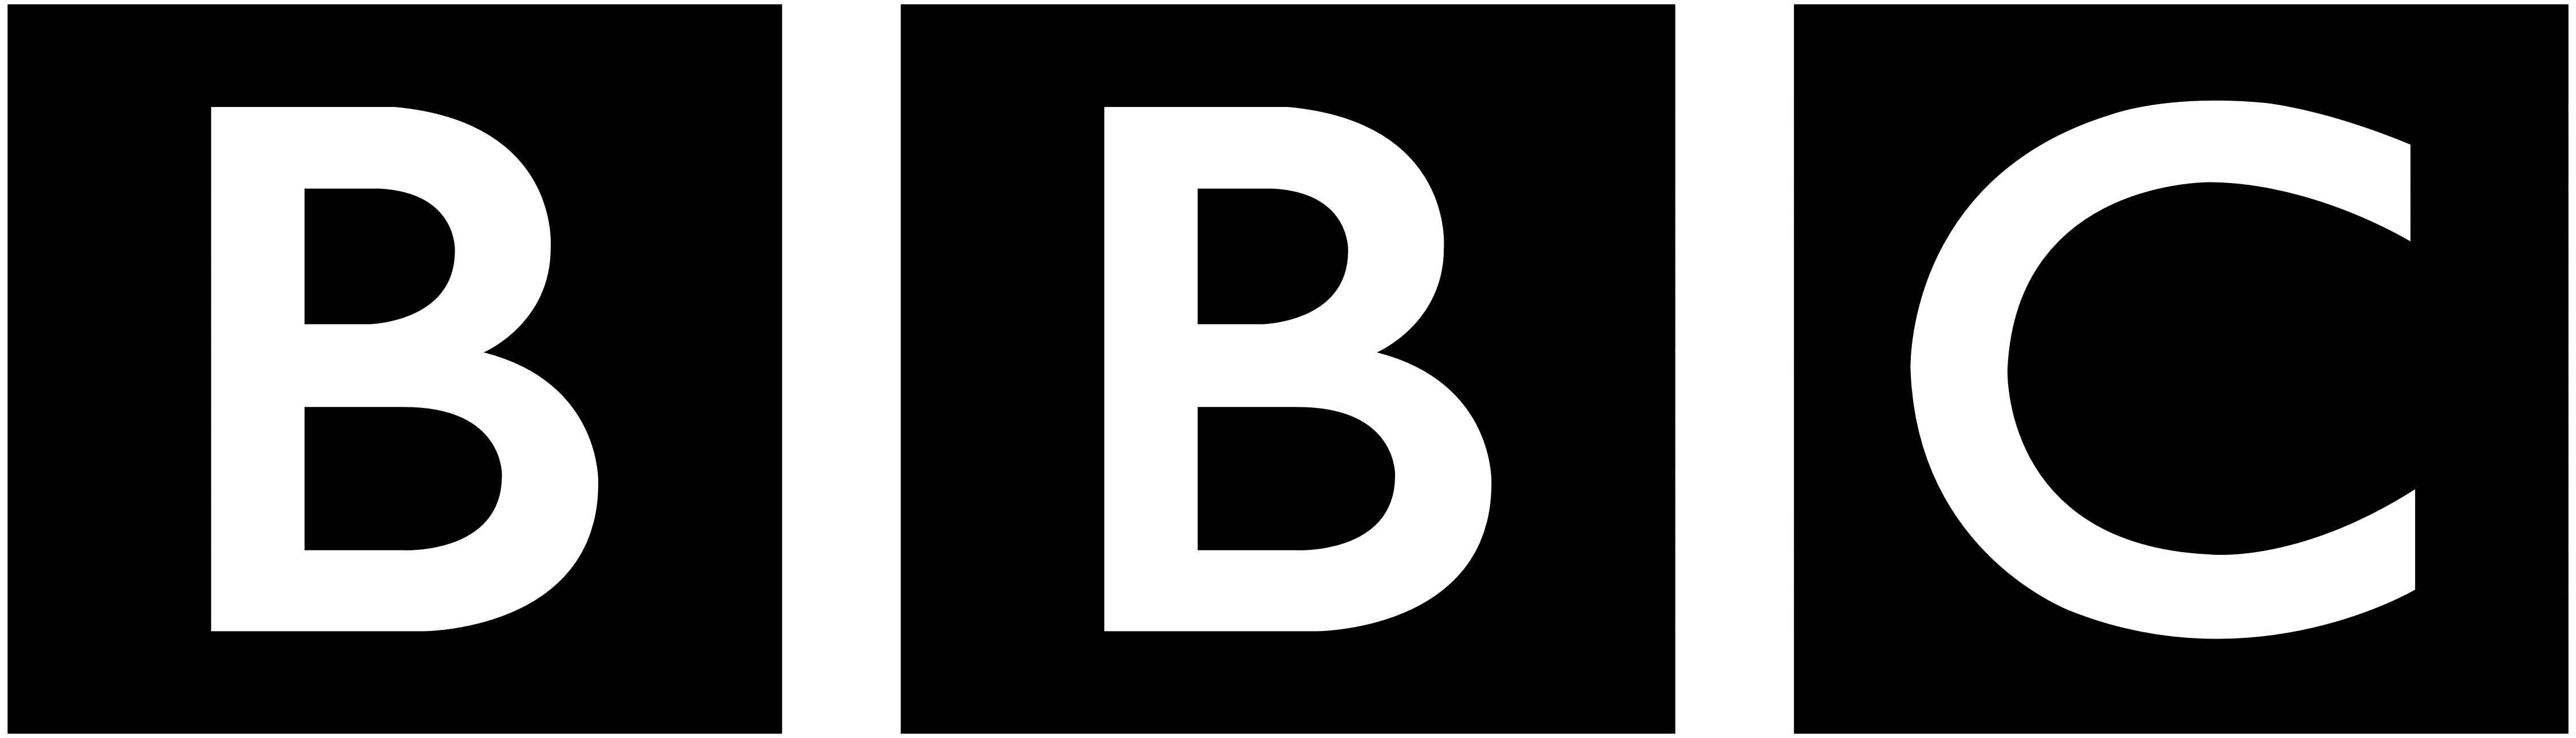 BBC_logo.png